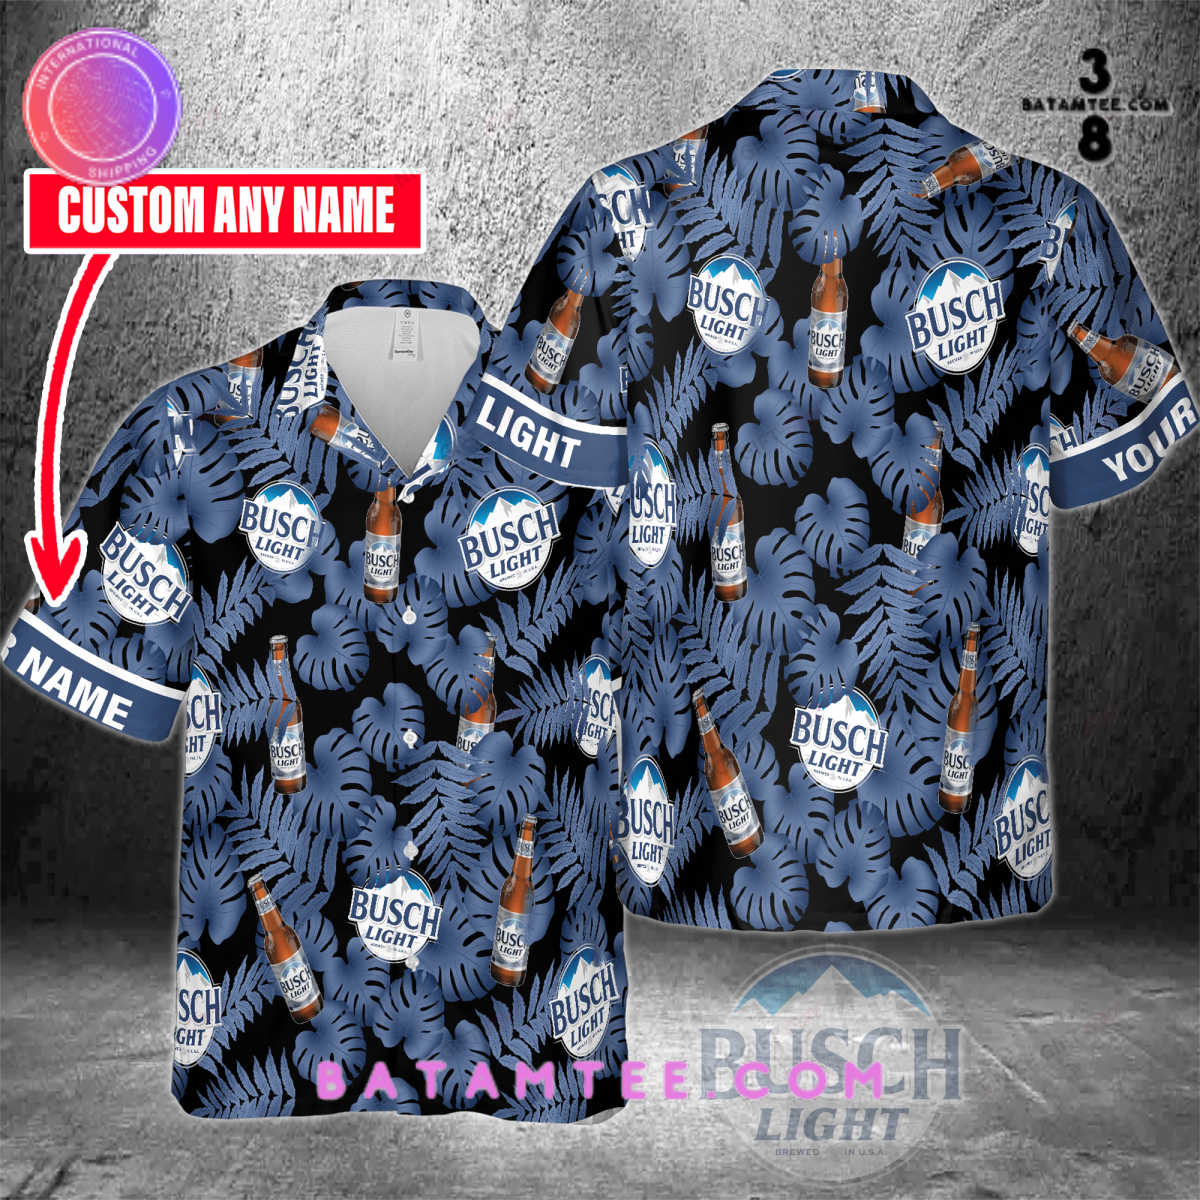 Busch Light Custom Name Dark Blue Hawaiian Shirt's Overview - Batamtee Shop - Threads & Totes: Your Style Destination